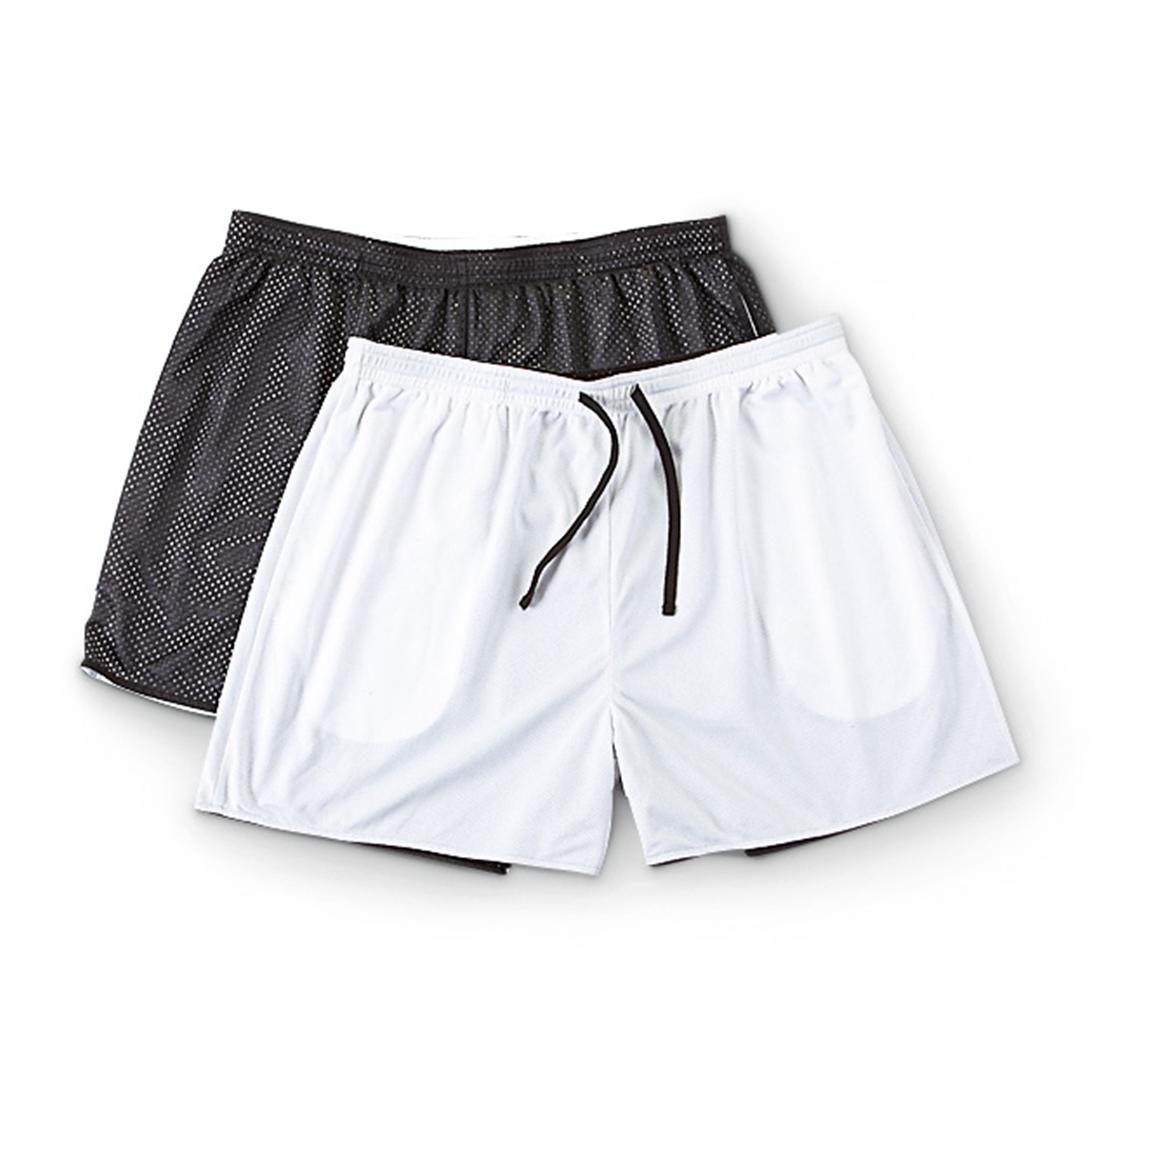 Men's Reversible Mesh Shorts, 2 Pack - 578258, Shorts at Sportsman's Guide